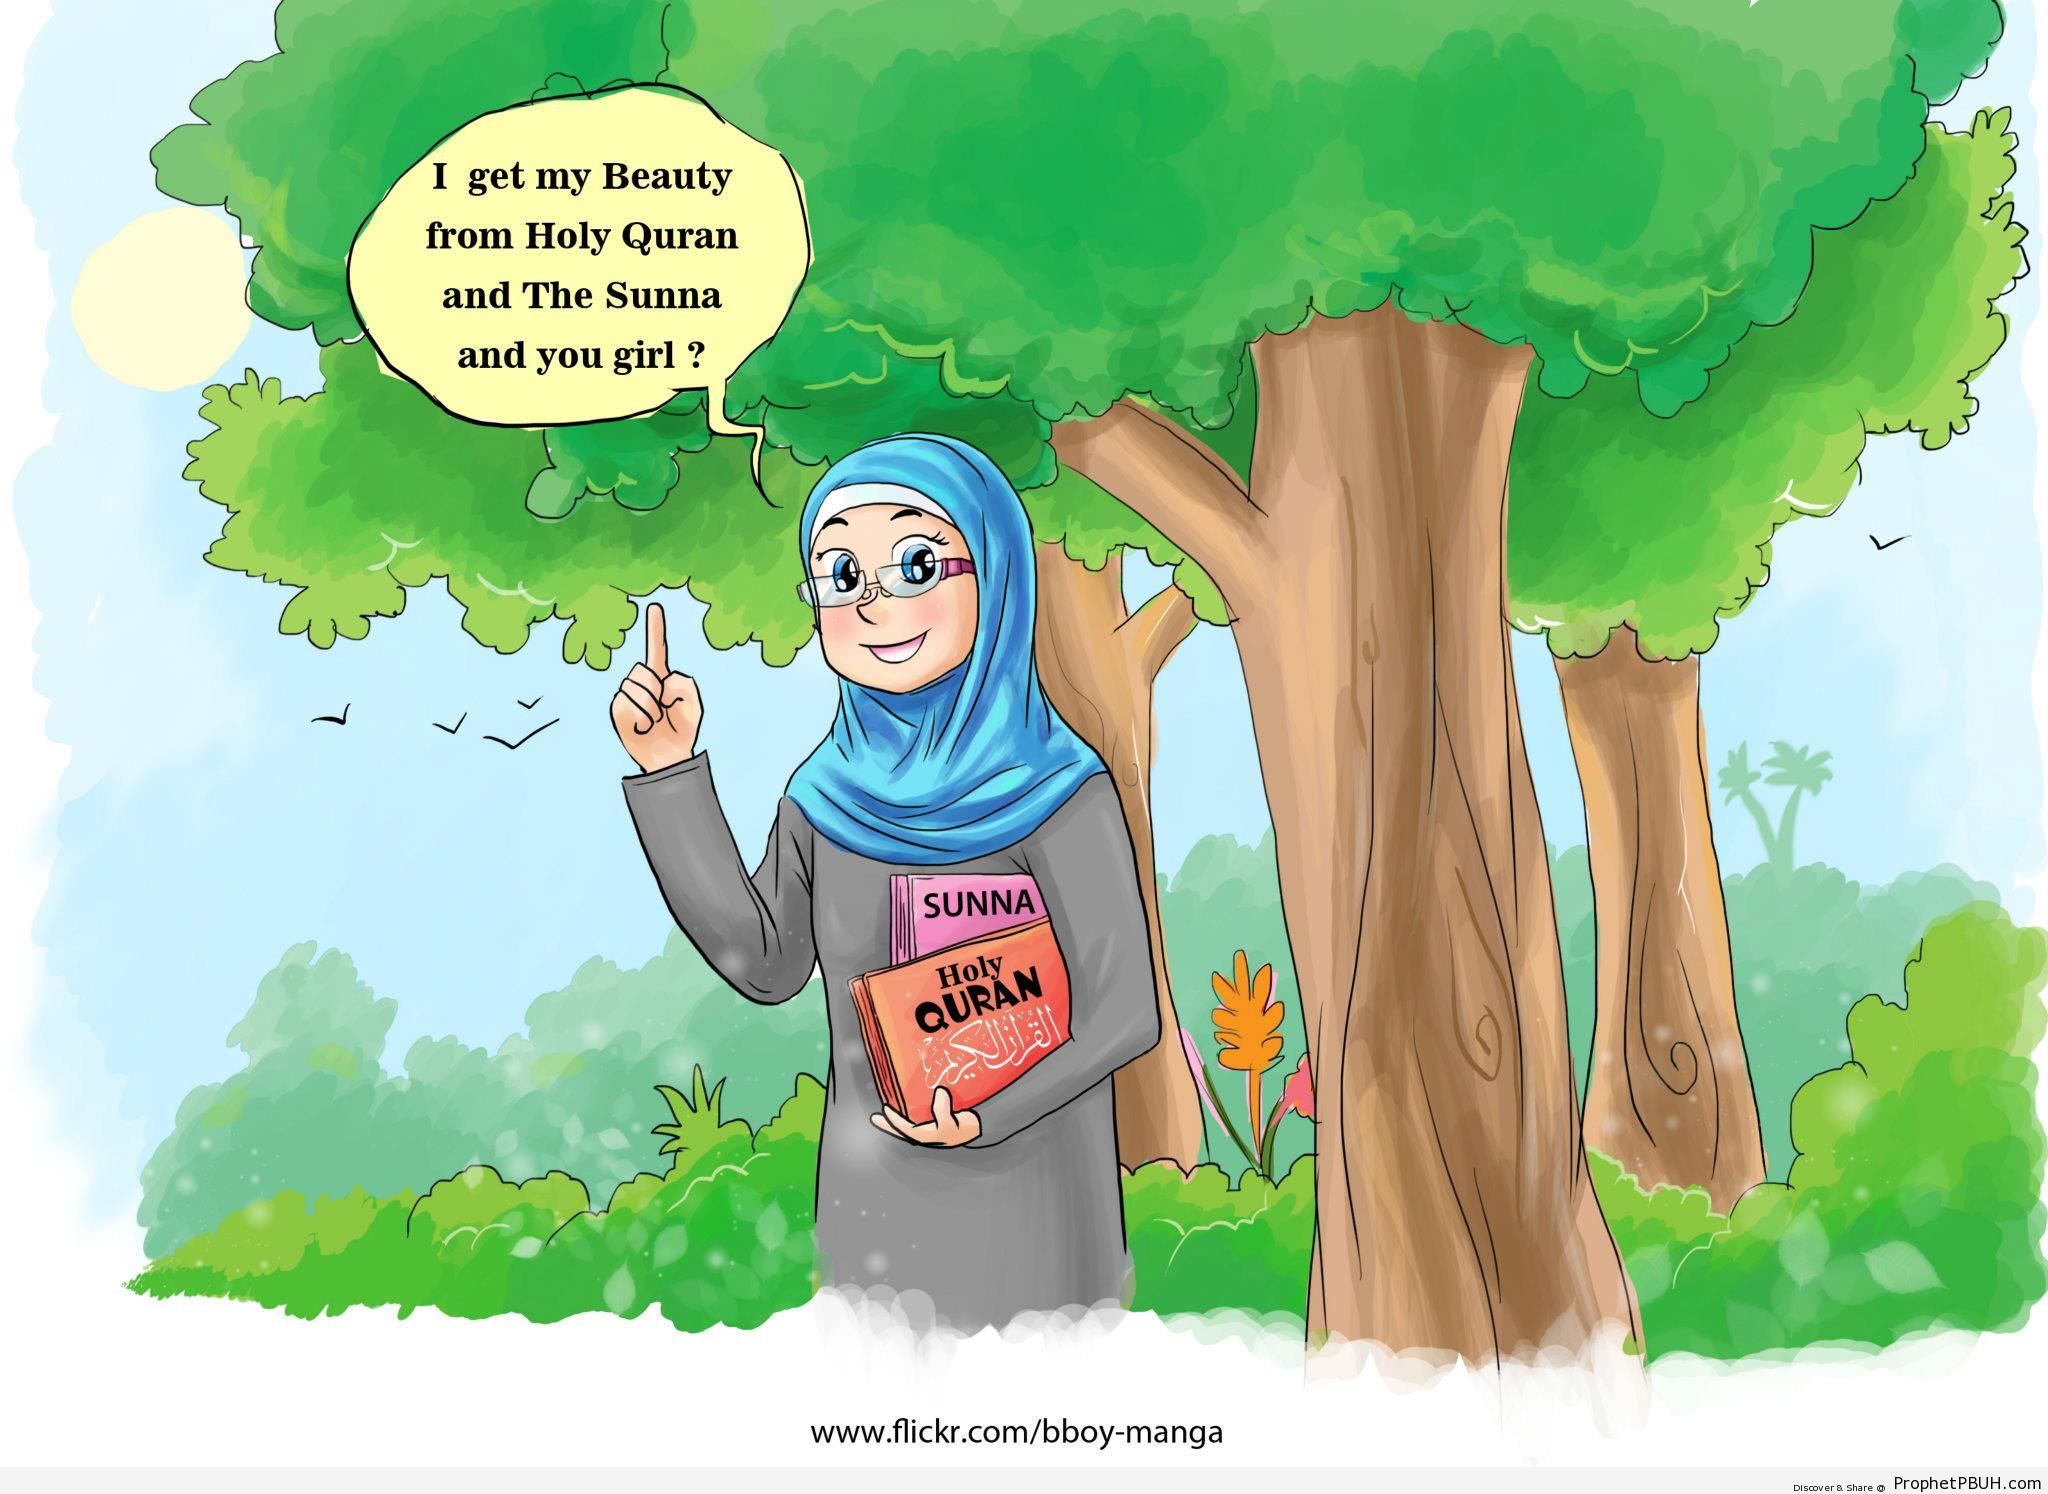 Beauty (Illustration of Muslim Woman Wearing Glasses) - Drawings 